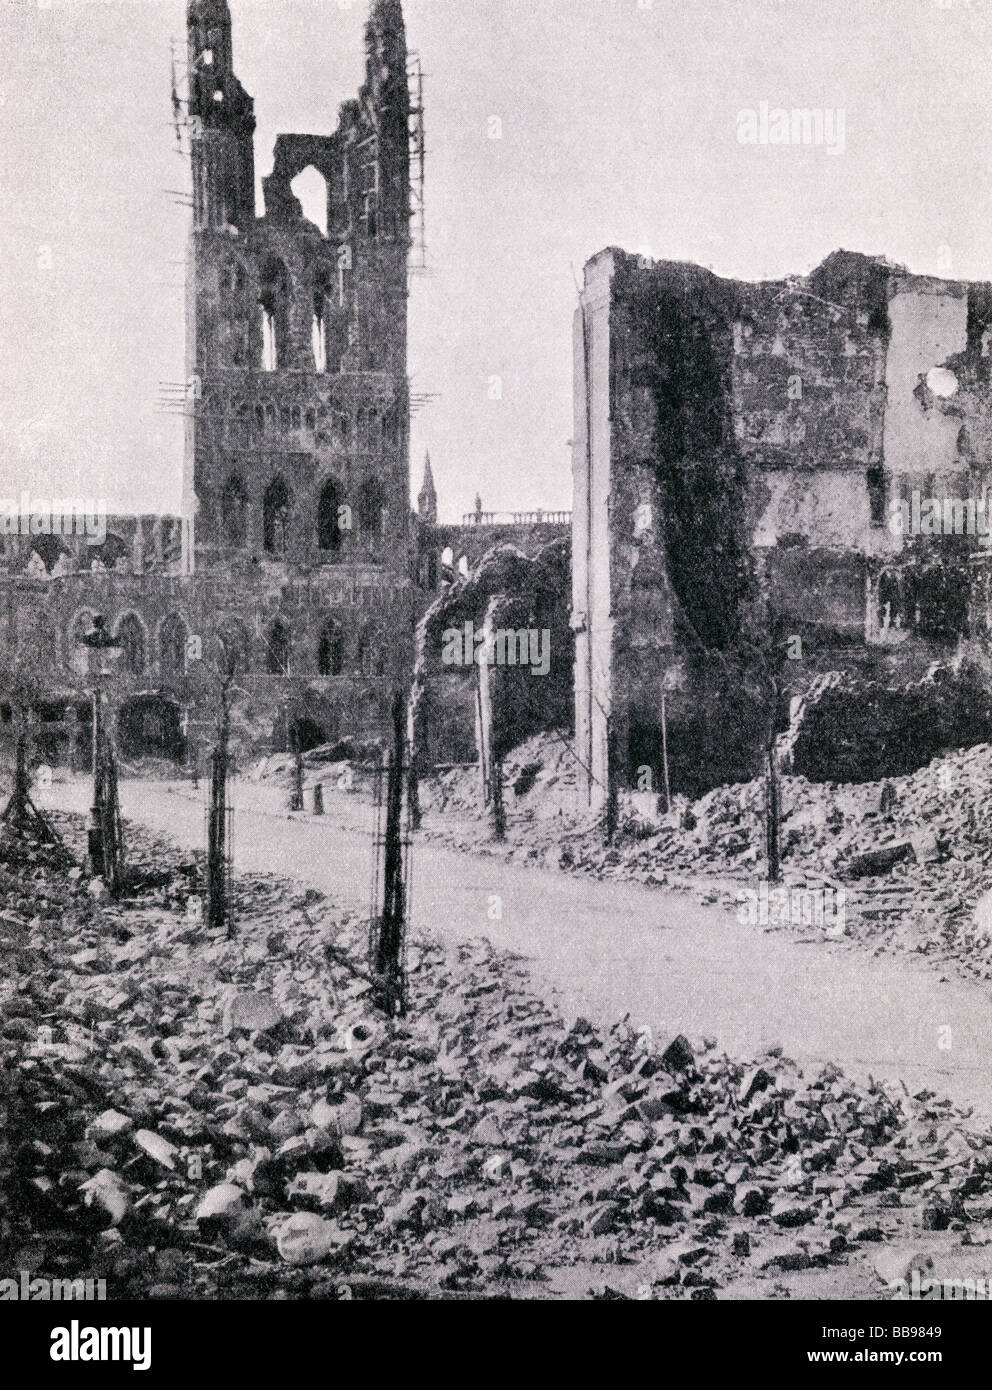 La torre in rovina del panno Hall ad Ypres, 1915. Foto Stock